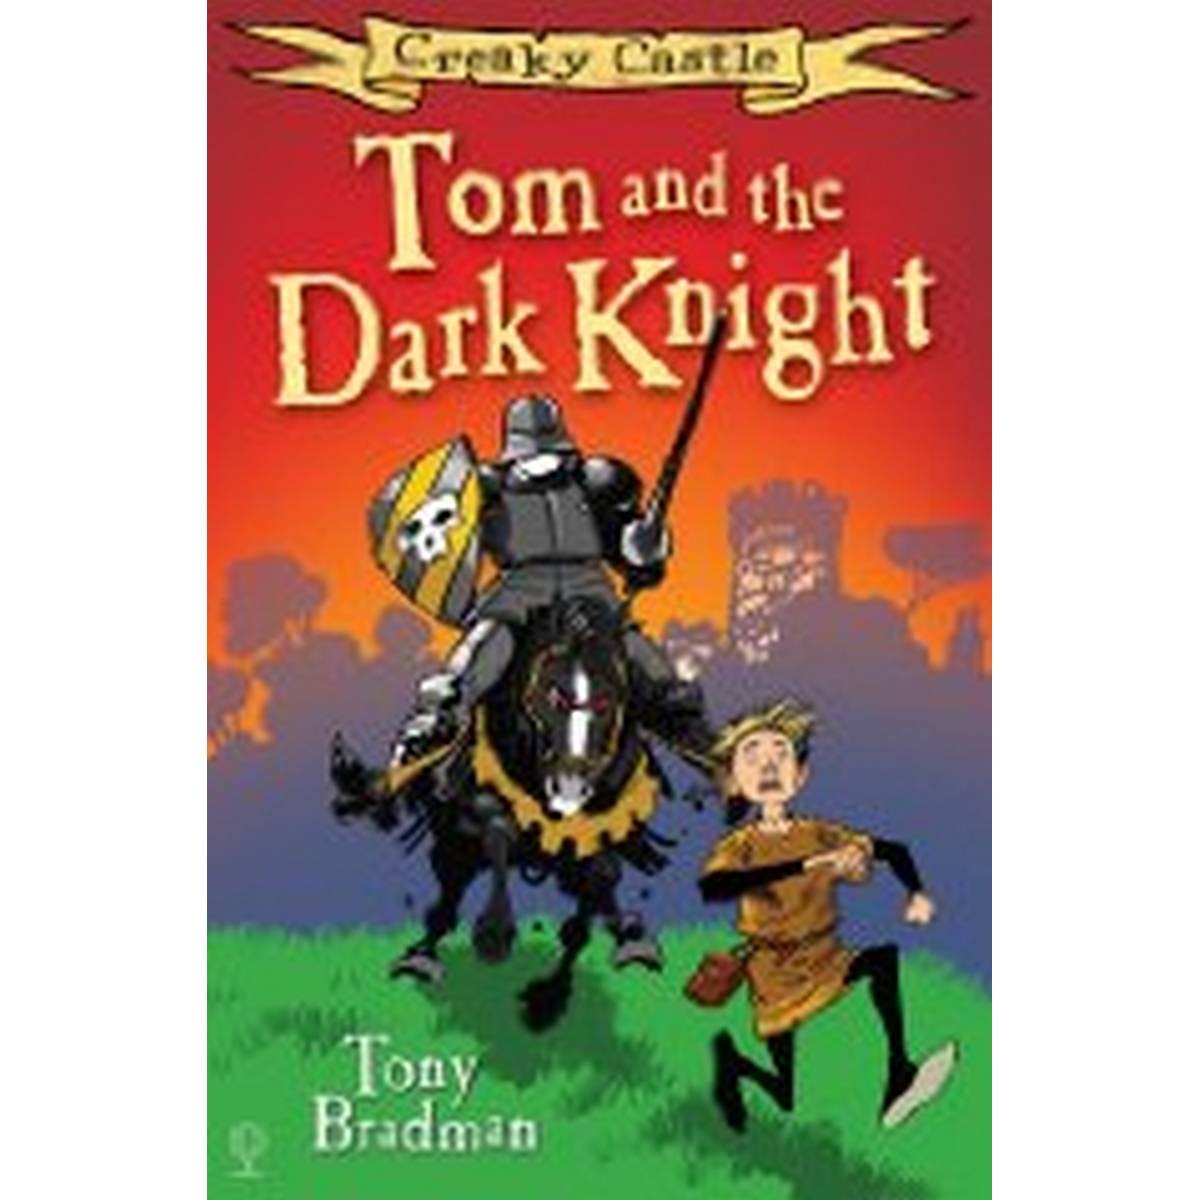 Creaky Castle: Tom and the Dark Knight